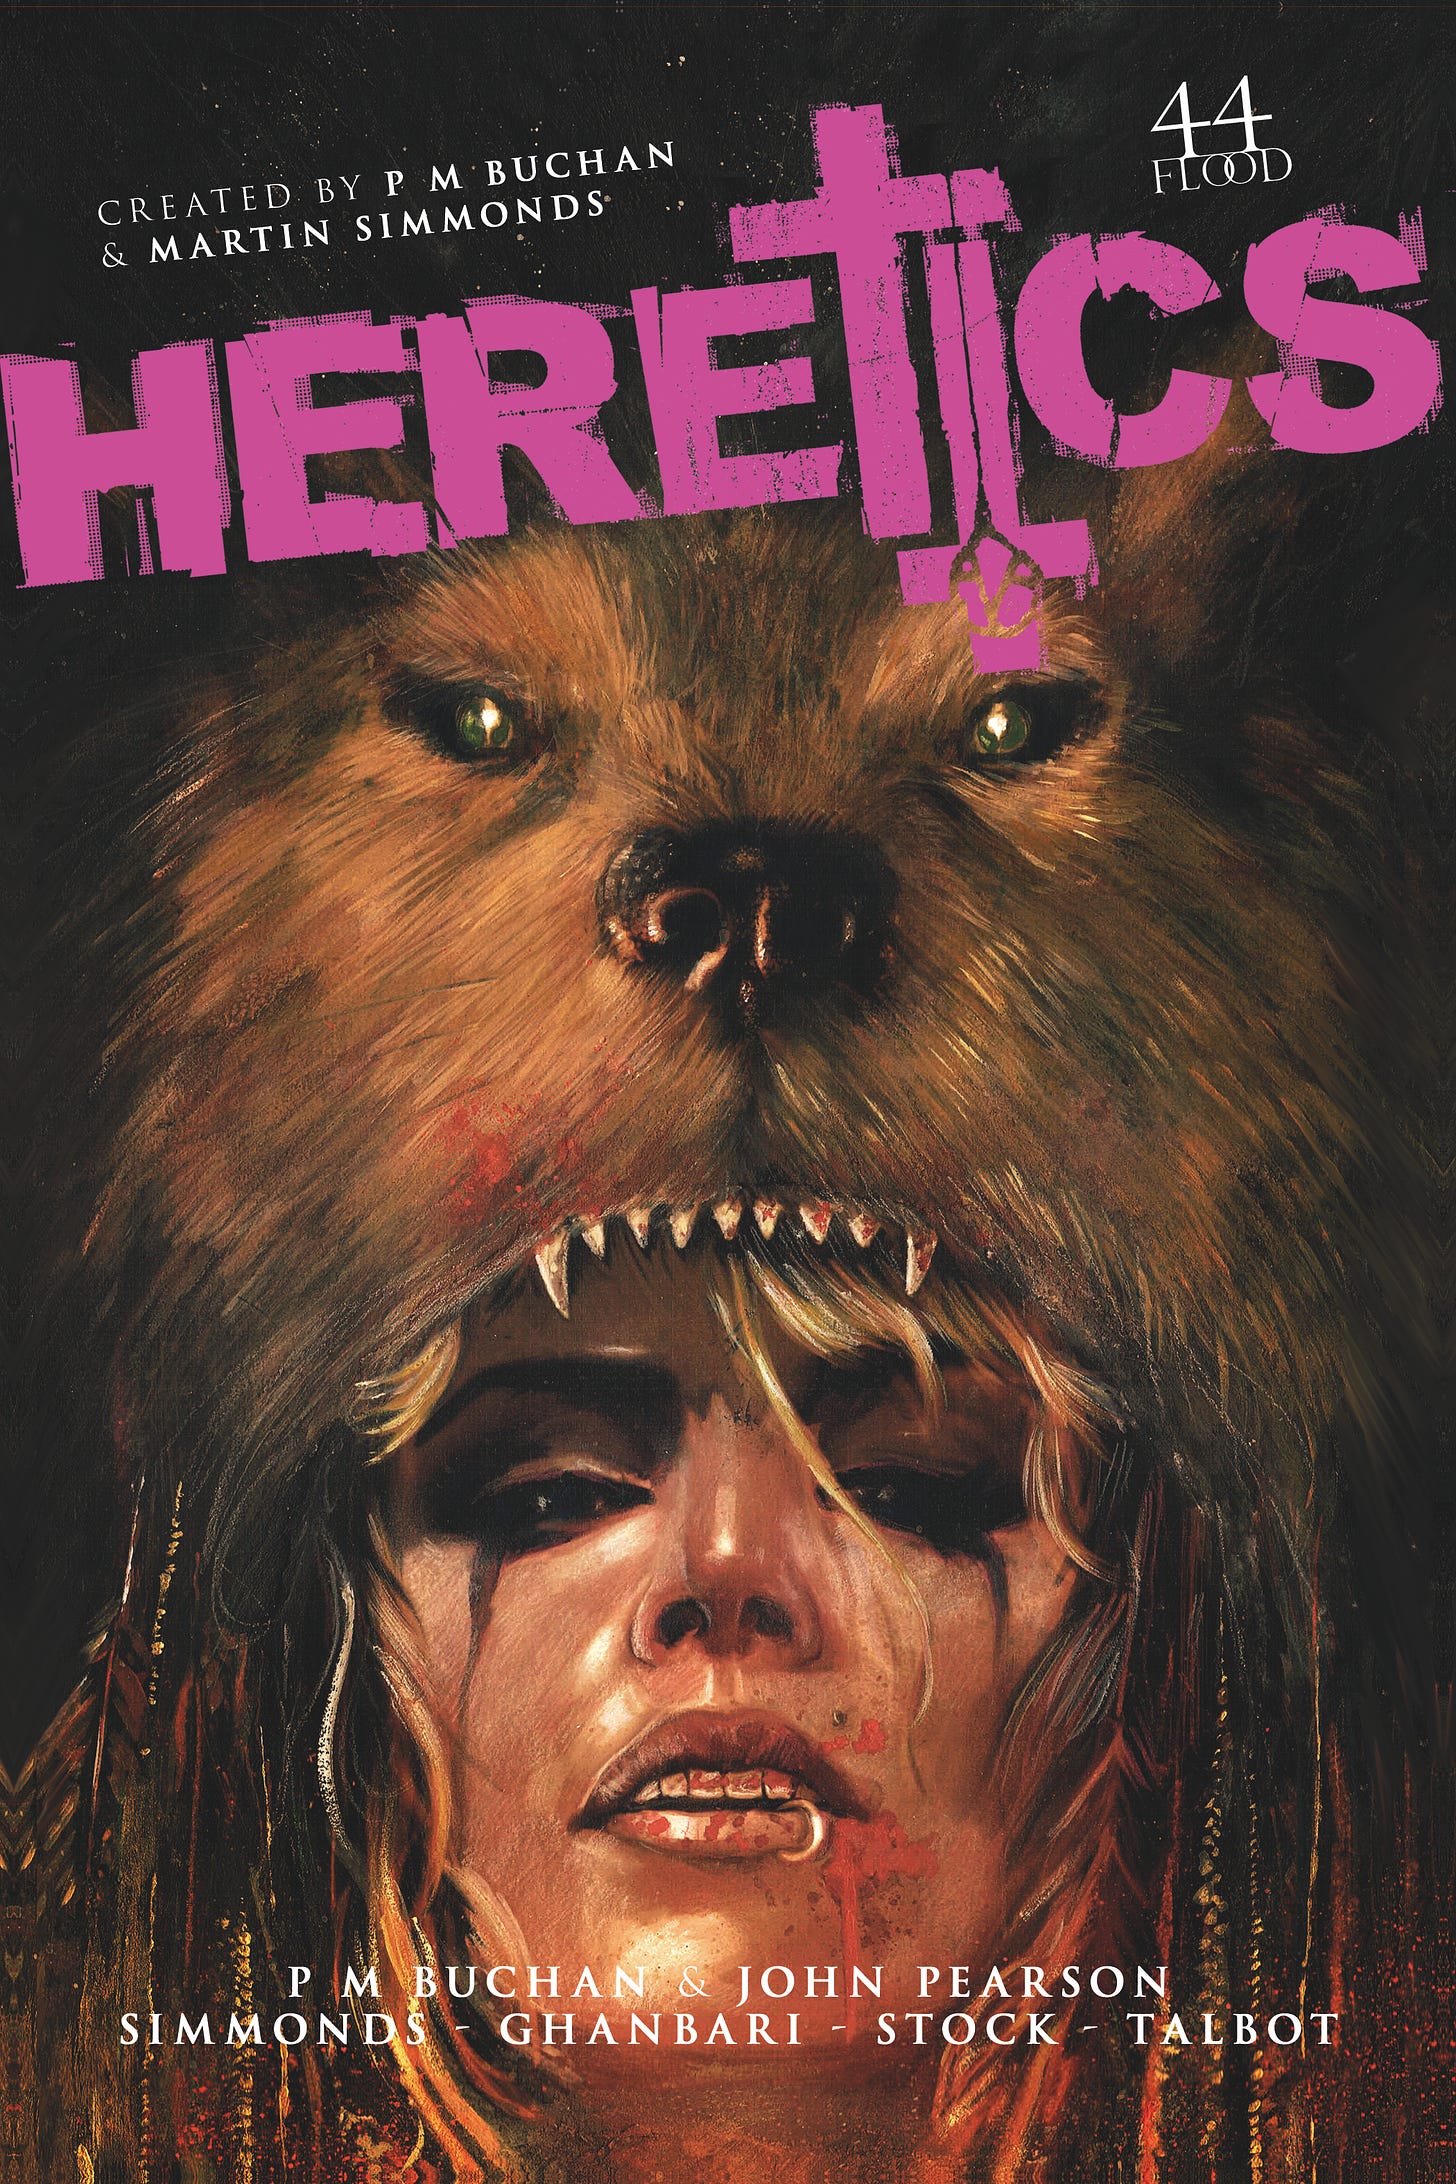 HERETICS #1 cover